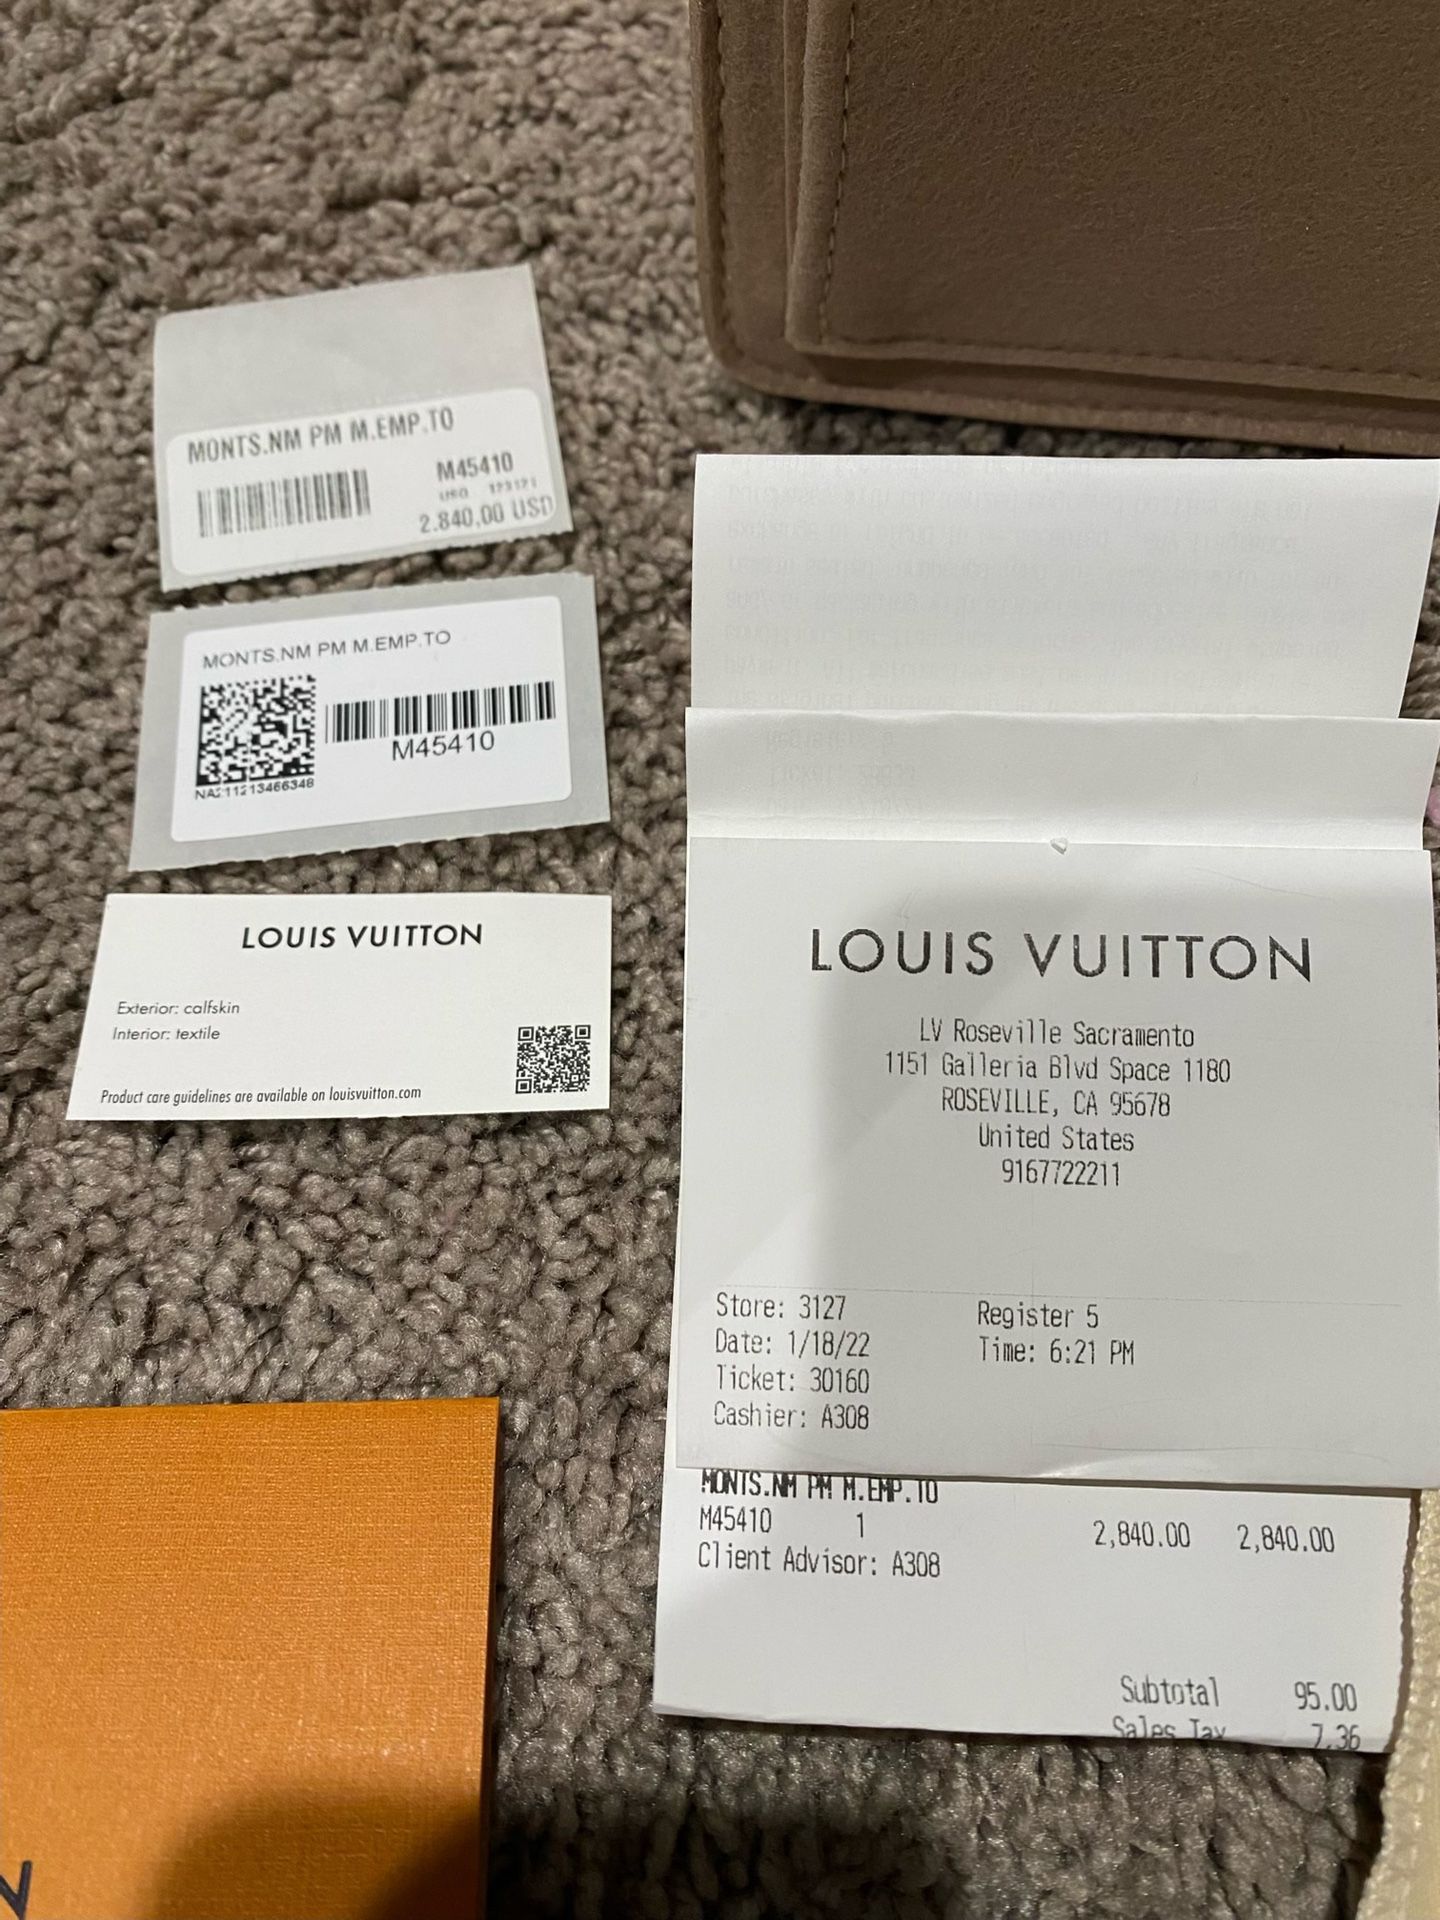 Louis Vuitton Roseville Sacramento Store, United States